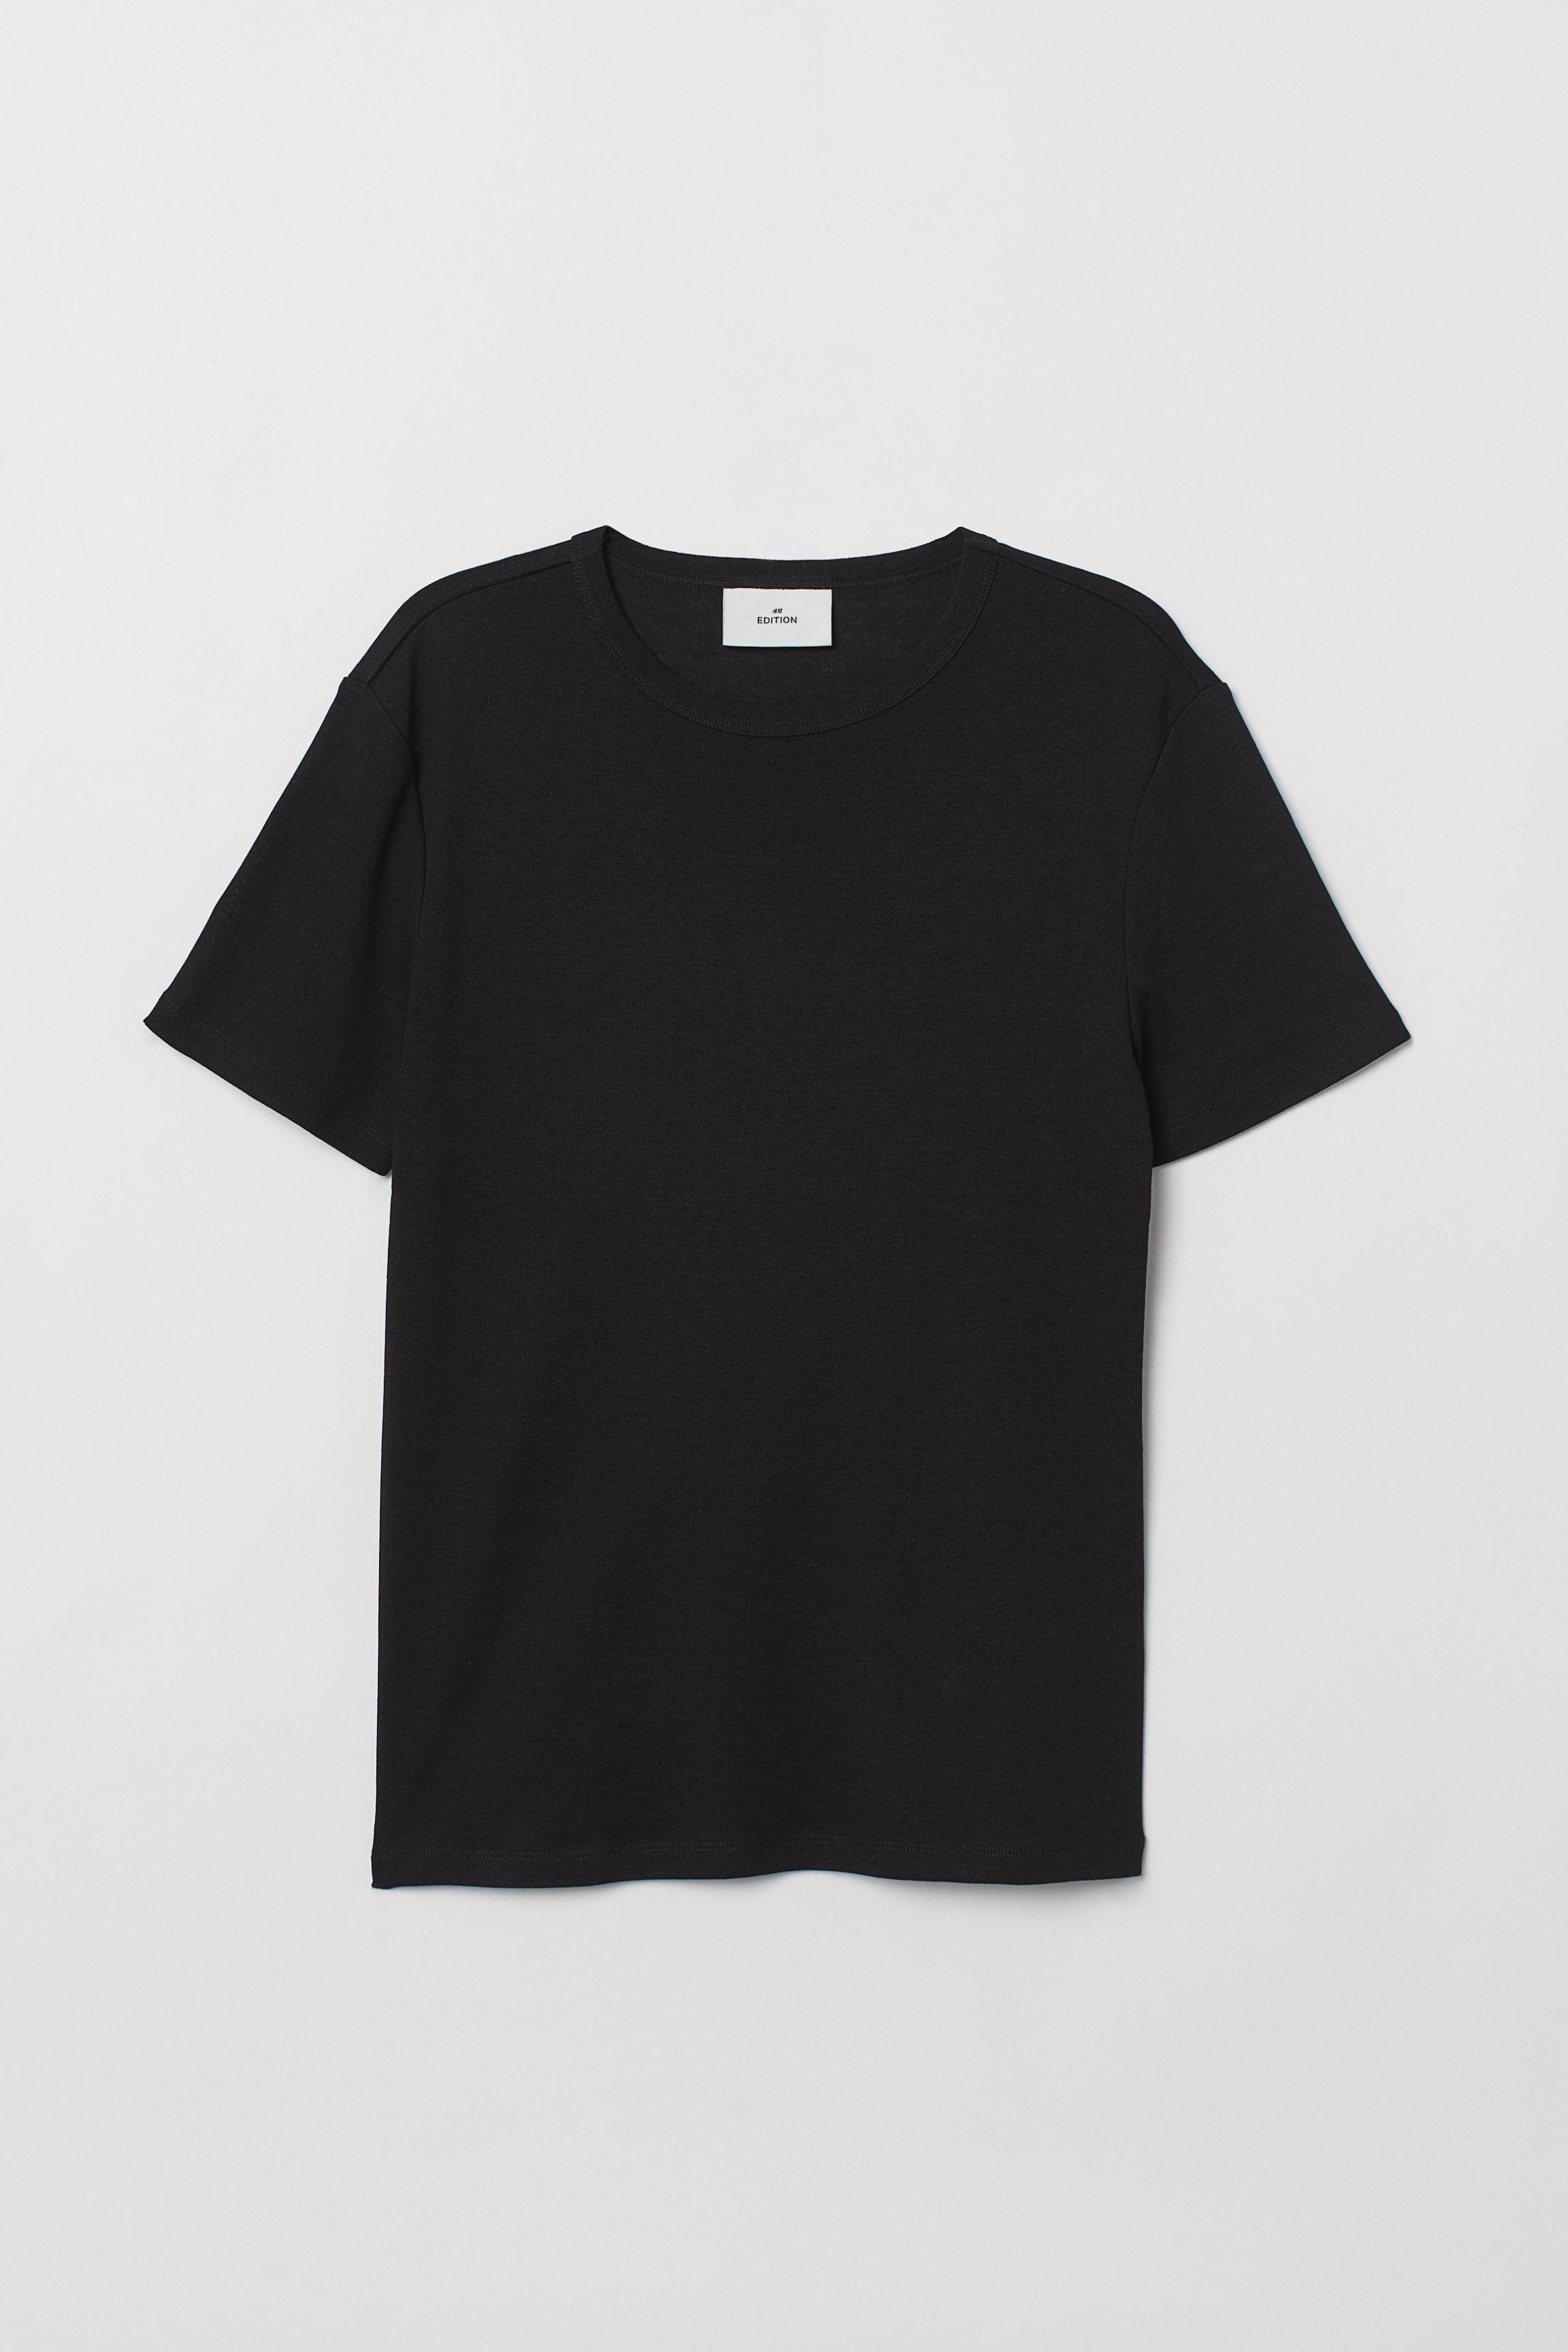 H&M Cotton Slim Fit Crew-neck T-shirt in Black for Men - Lyst